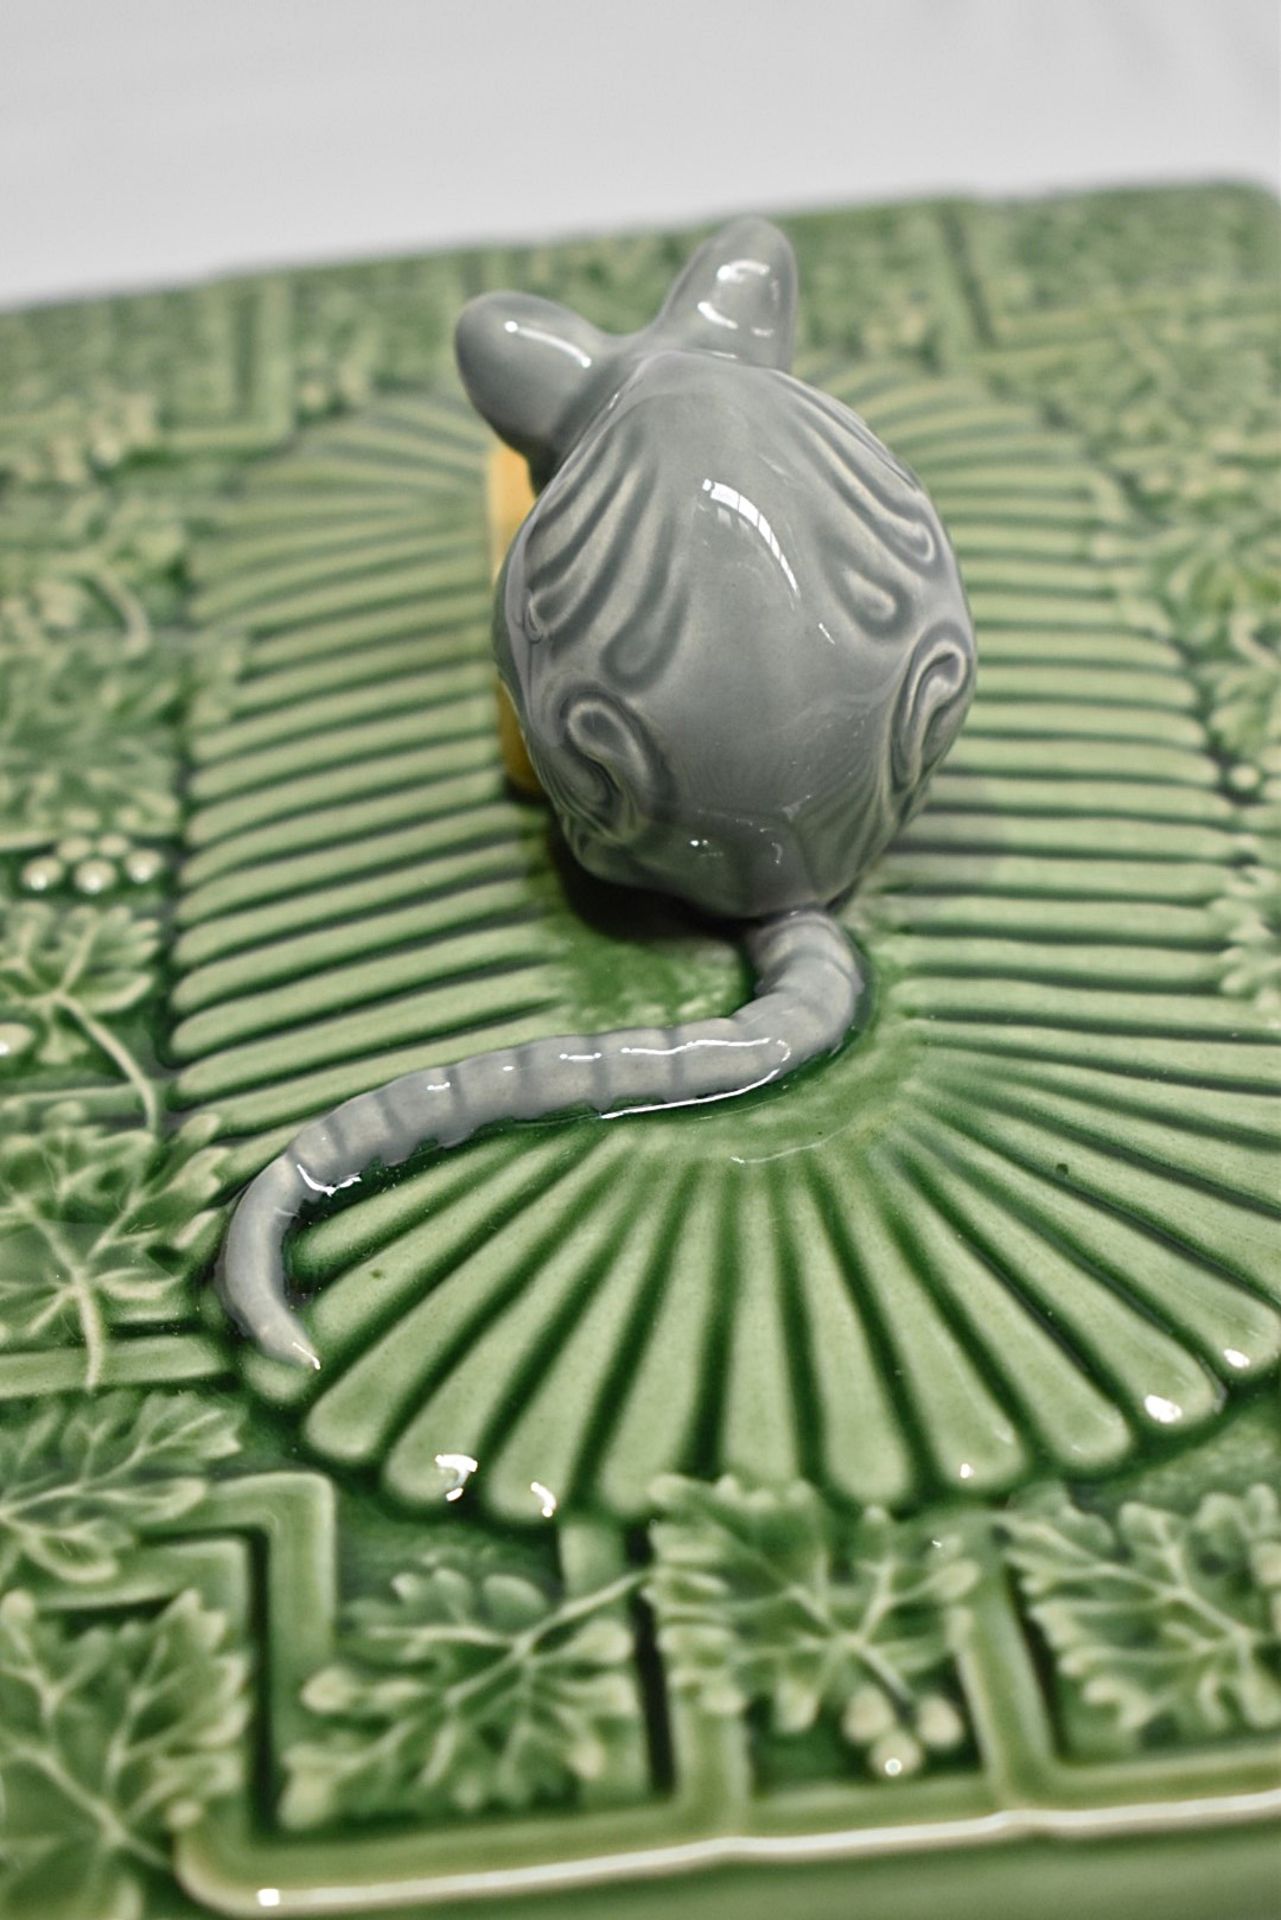 1 x BORDALLO PINHEIRO Rectangular Artisan Earthenware Closh Plate Cover With Mouse Figurine - Image 4 of 7